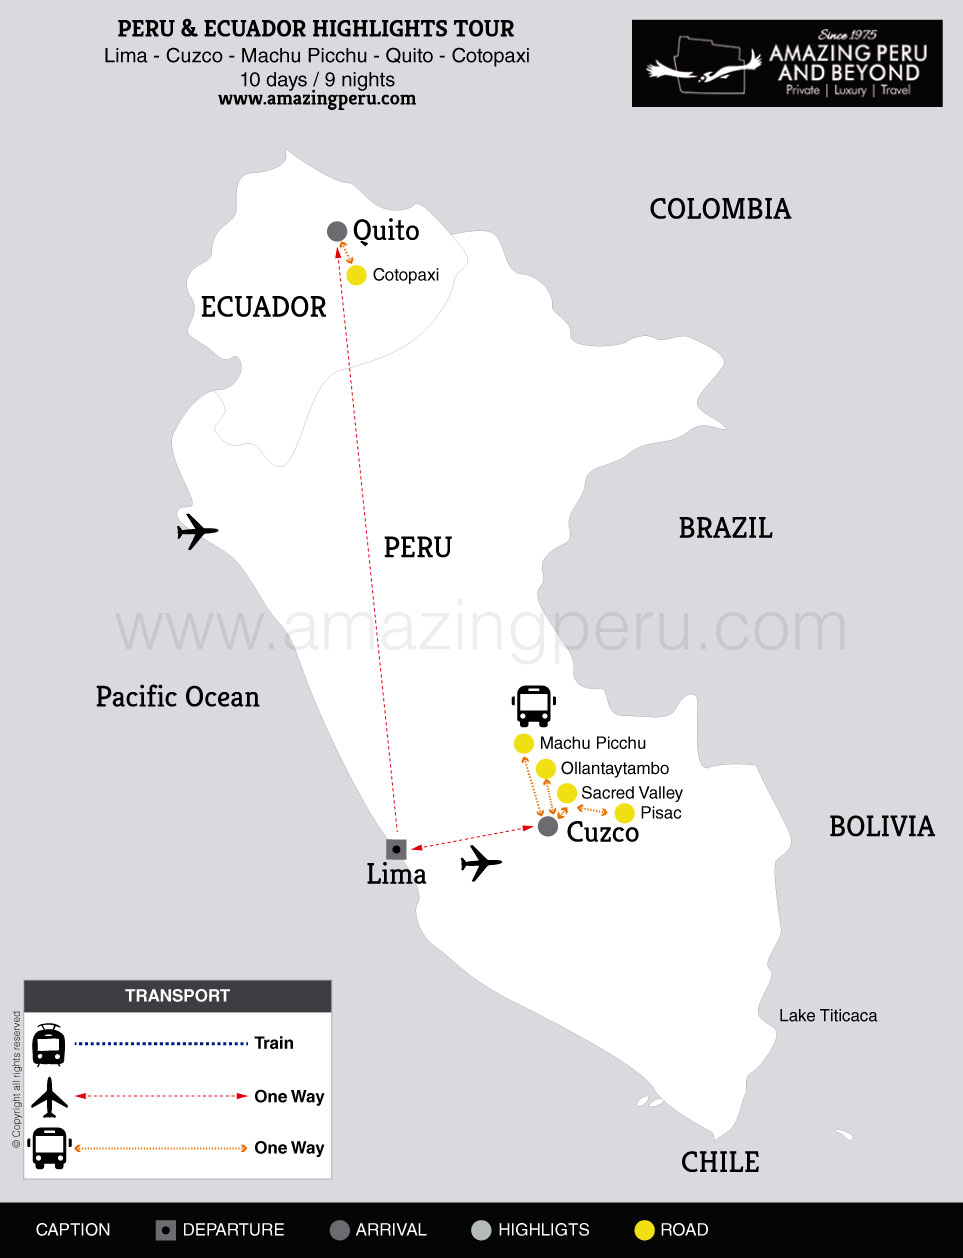 Lima - Cuzco - Machu Picchu - Quito - Cotopaxi